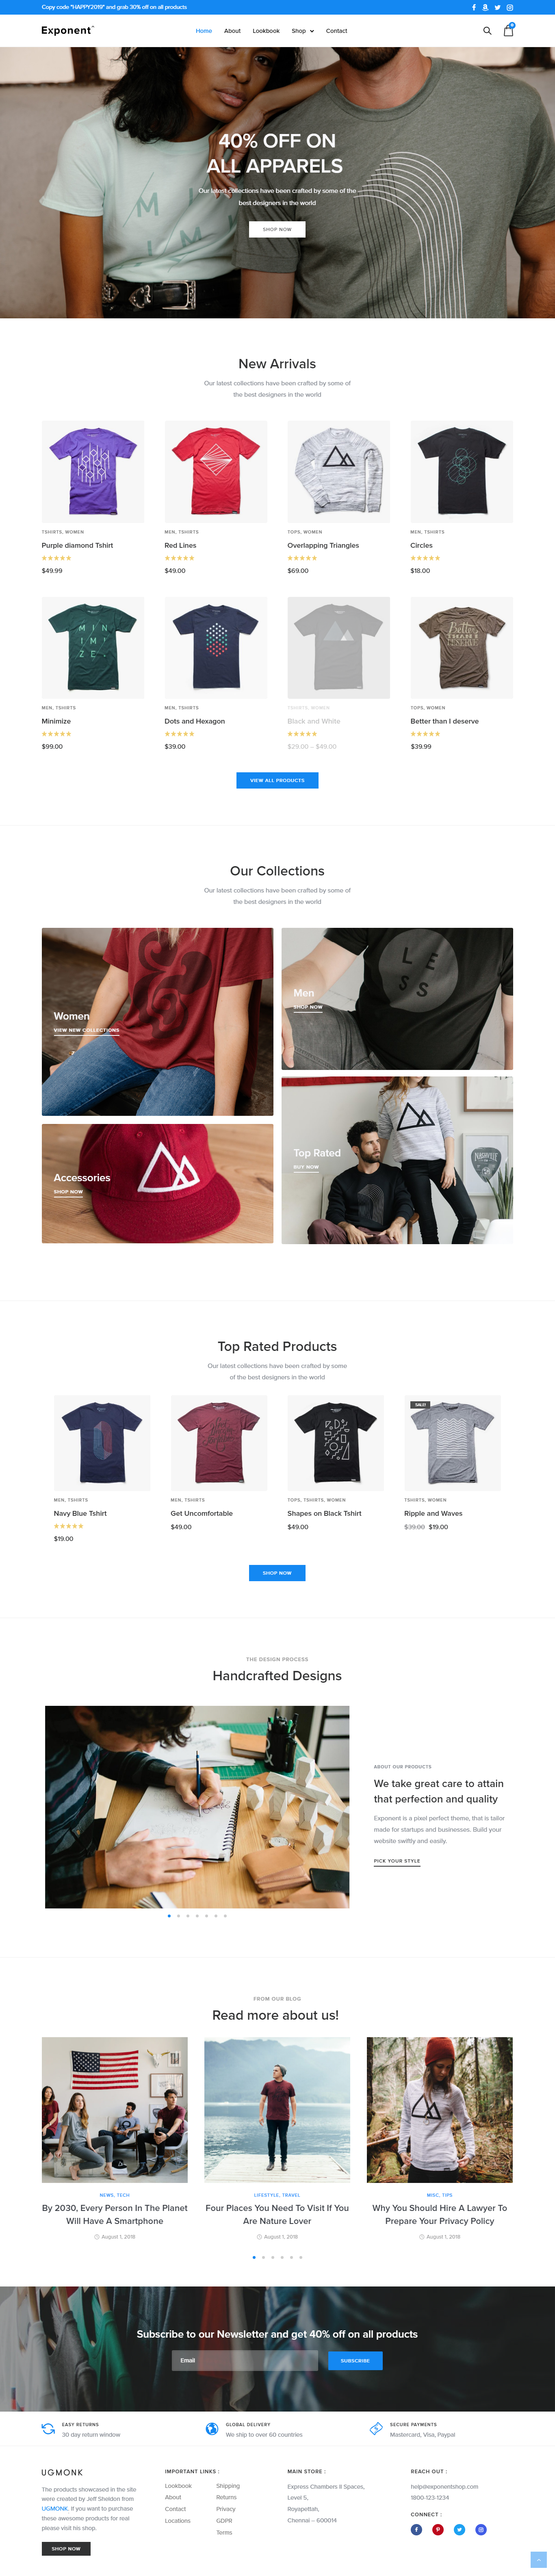 Exponent – Best Retail Shop WordPress Theme